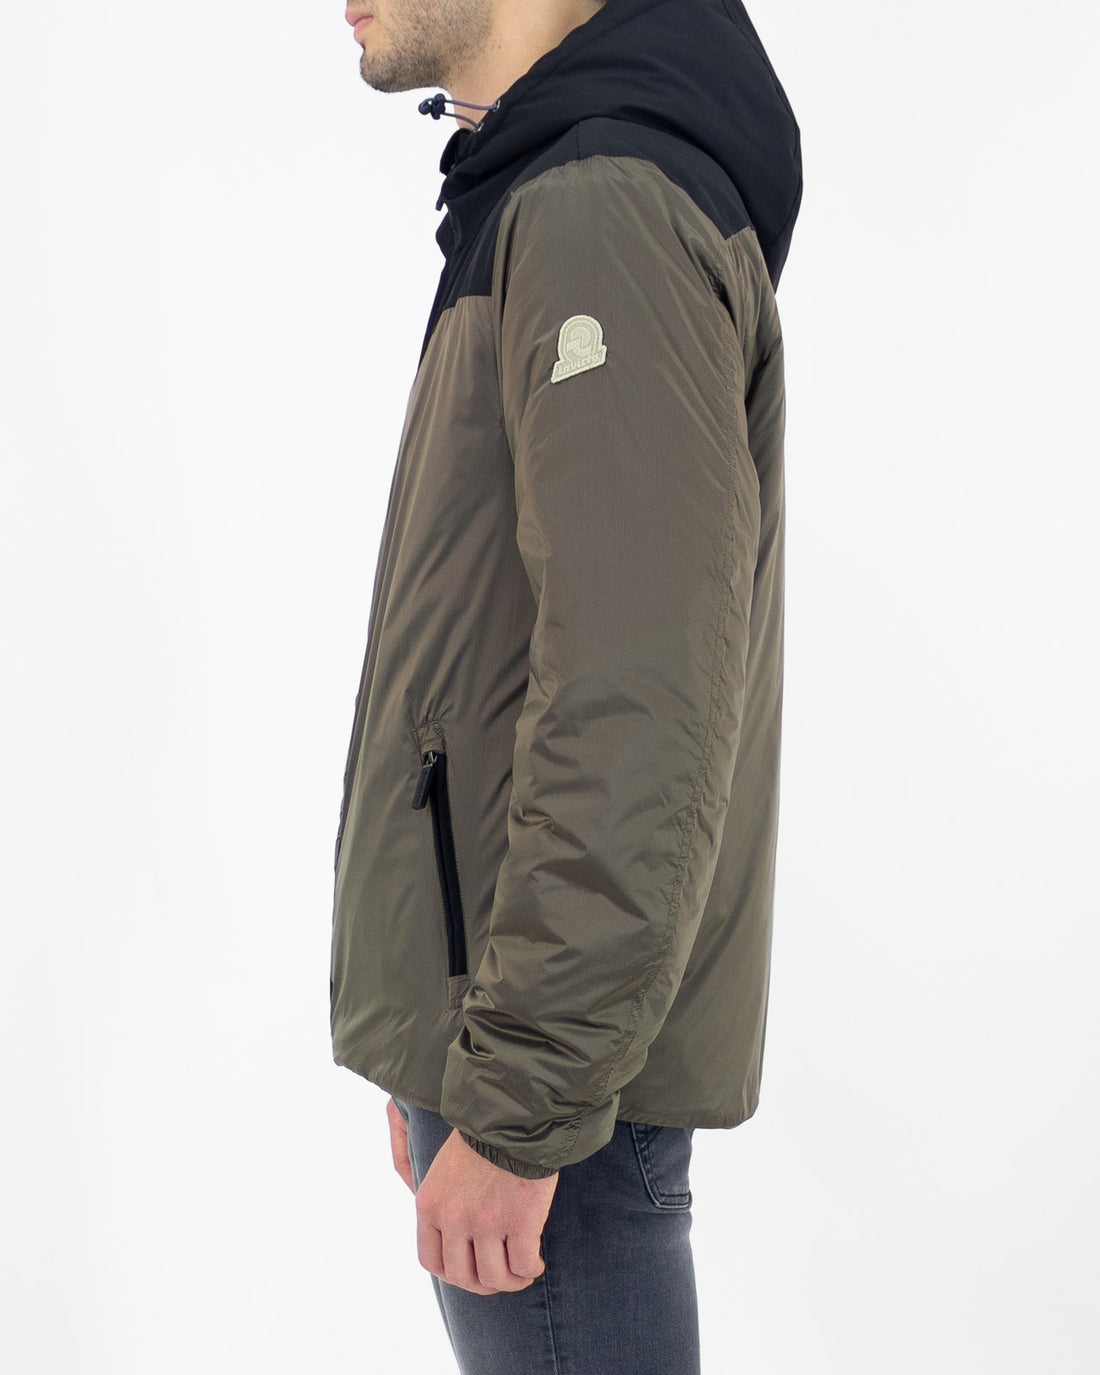 Invicta two-tone jacket